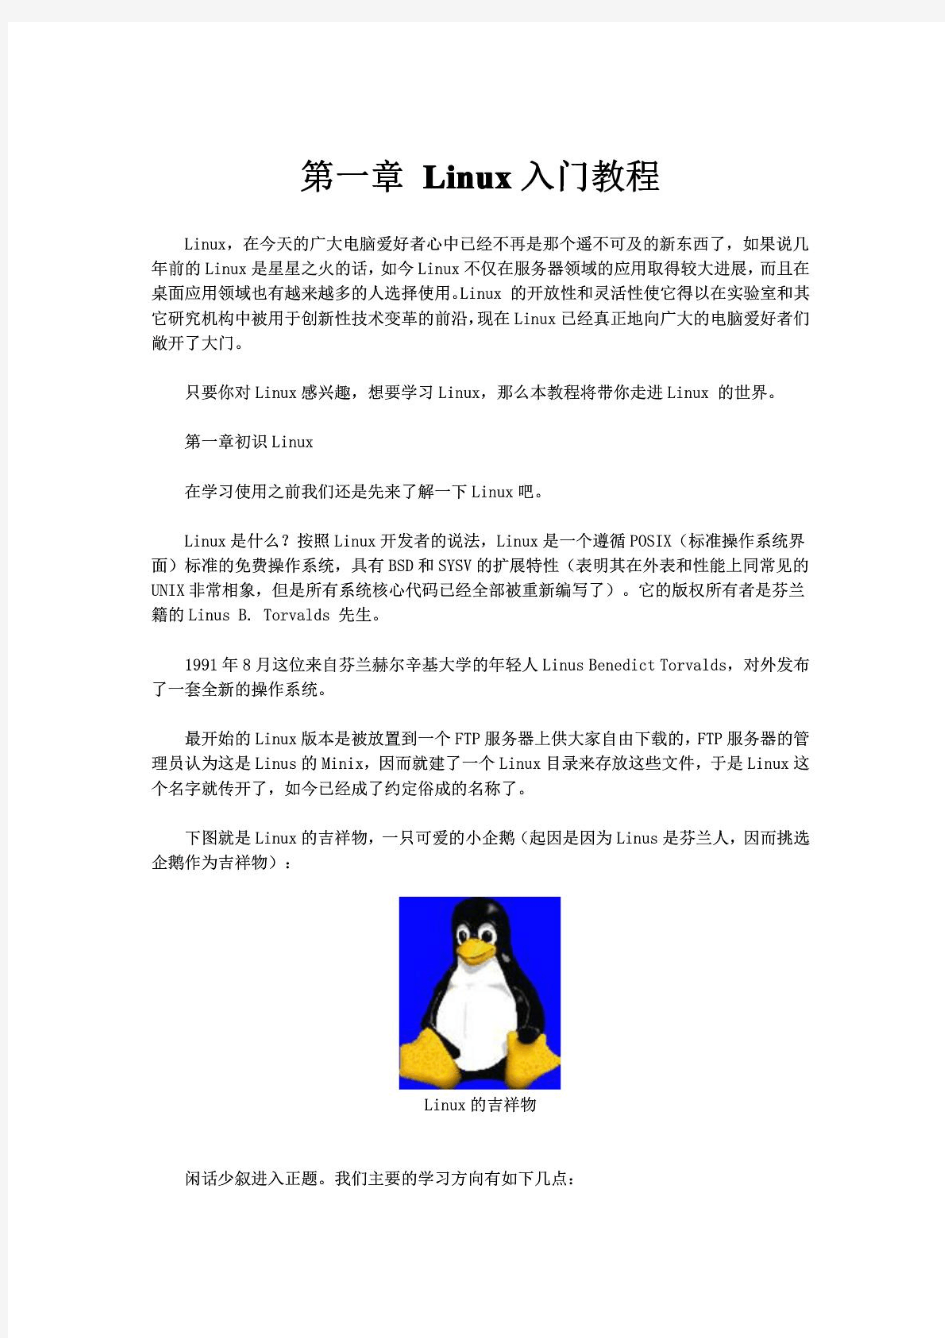 Linux入门教程(精华基础版)